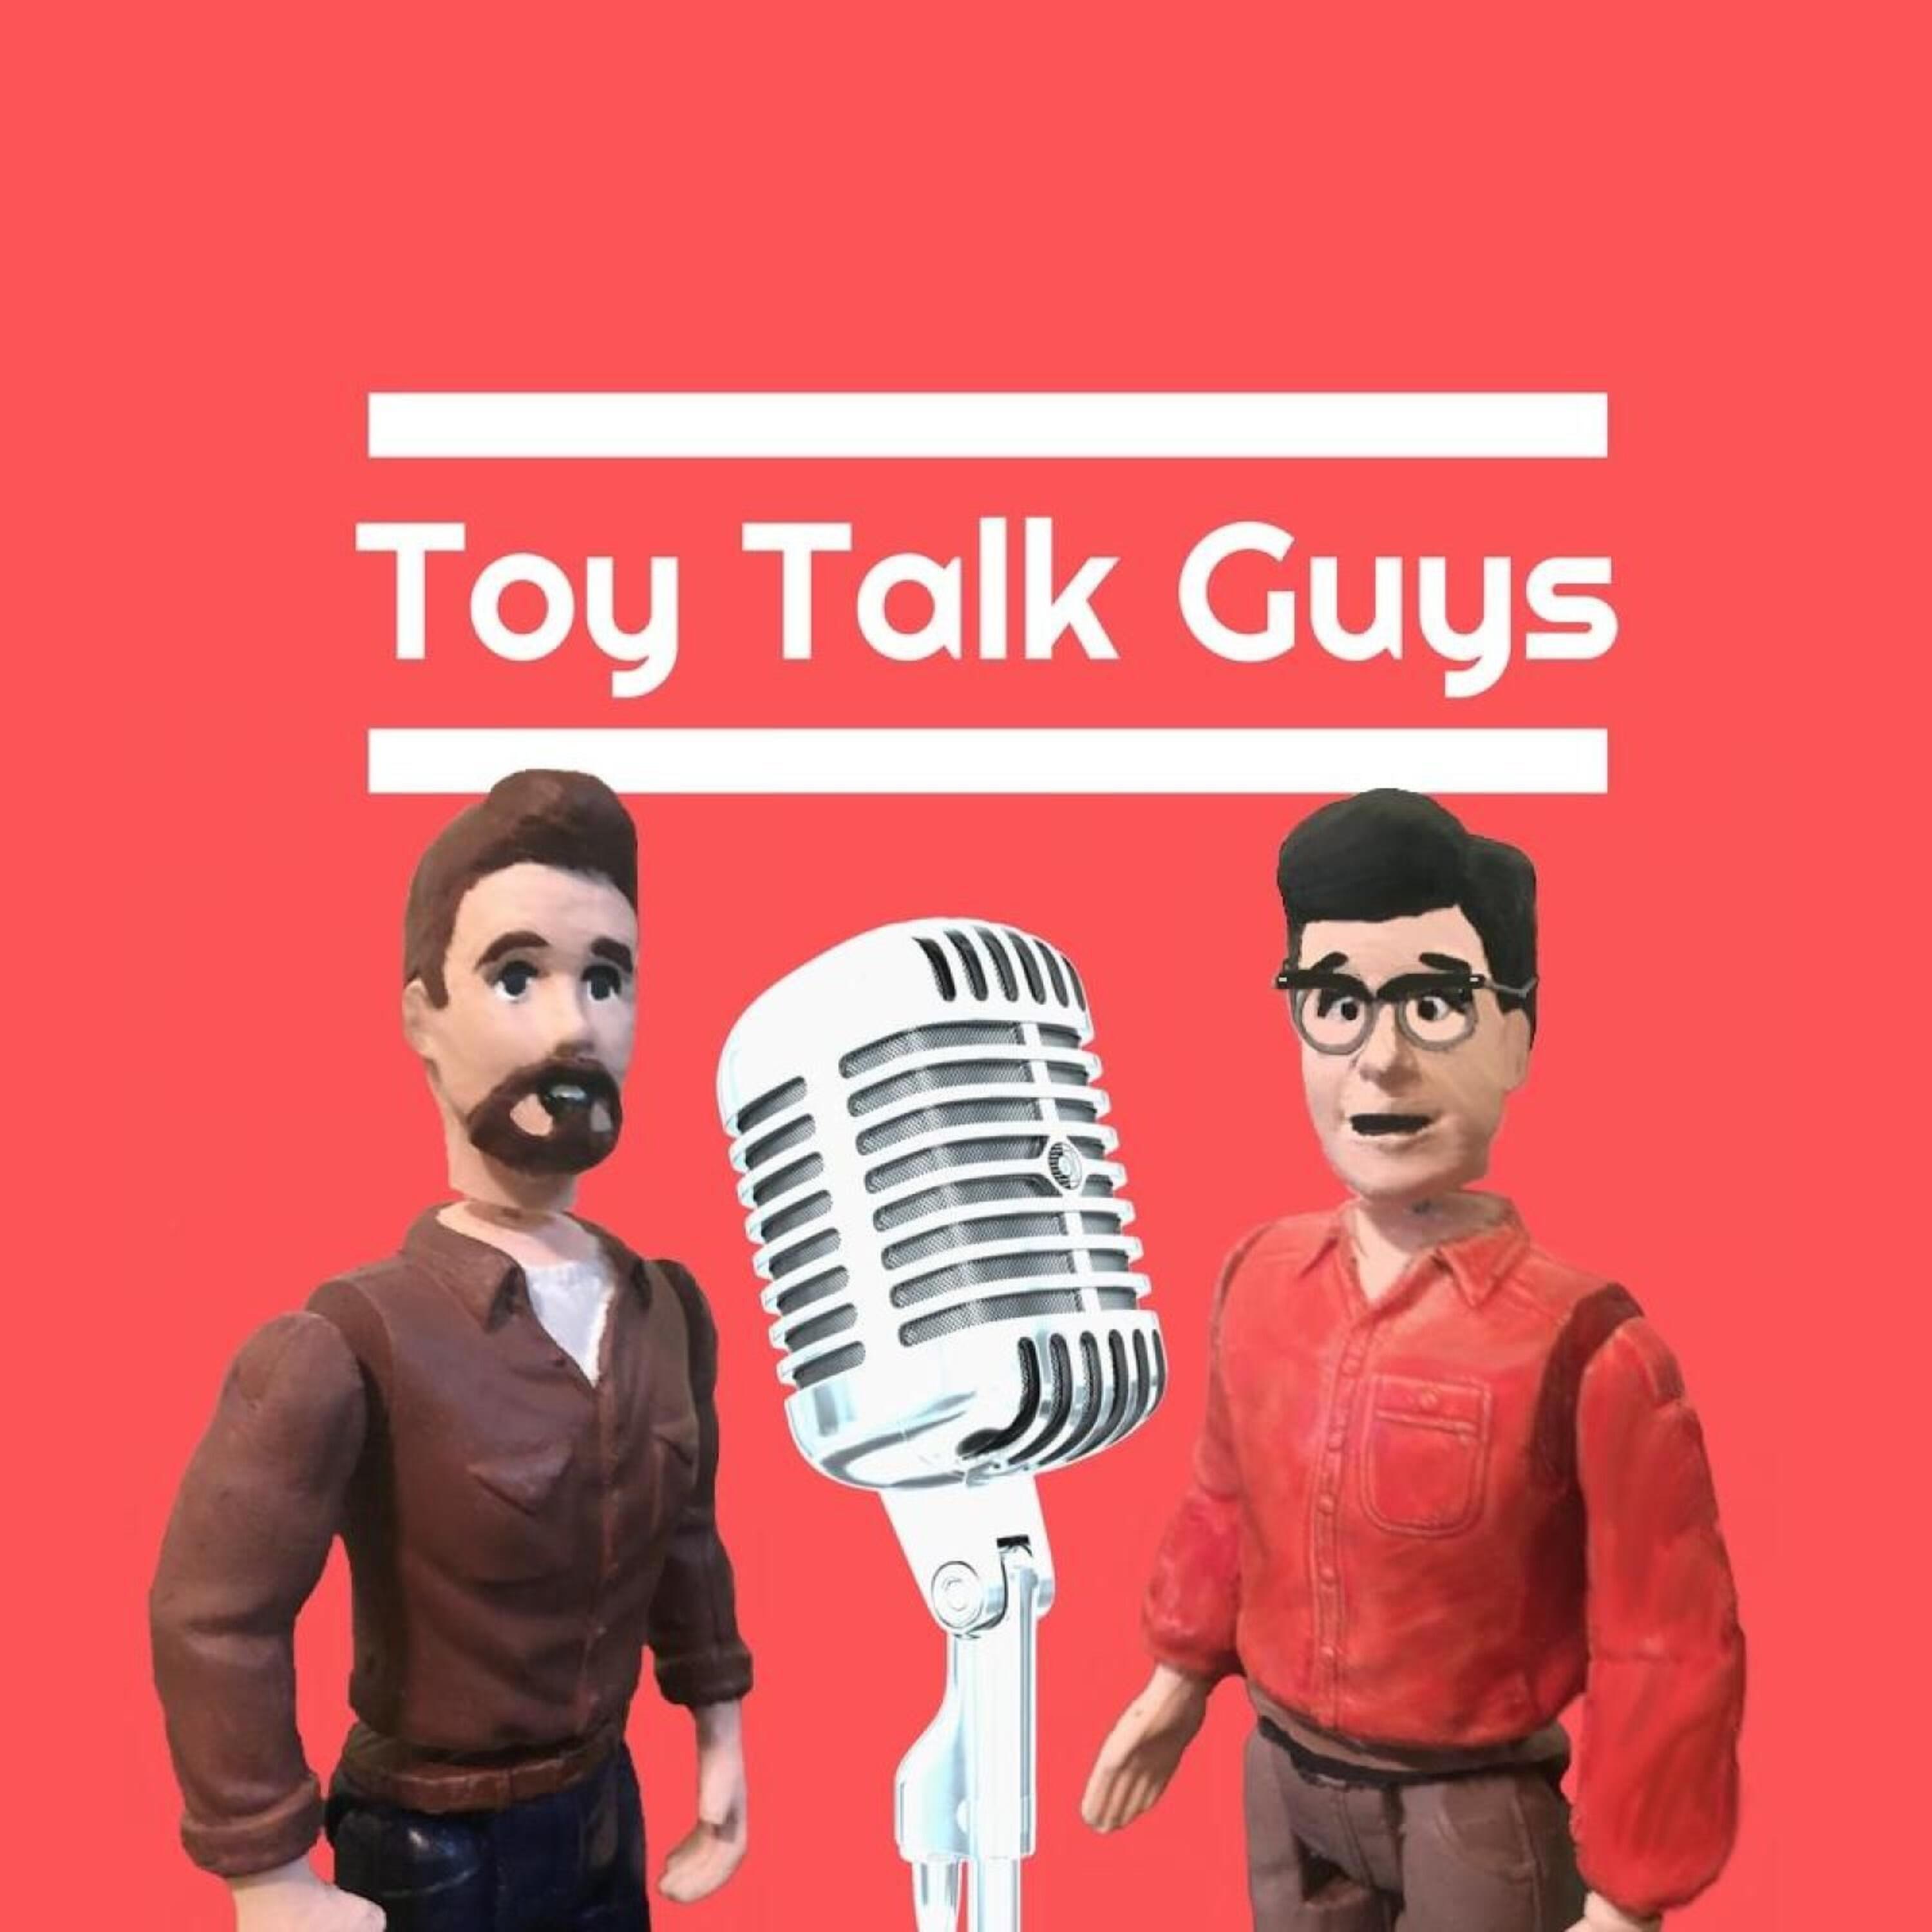 Toy talk